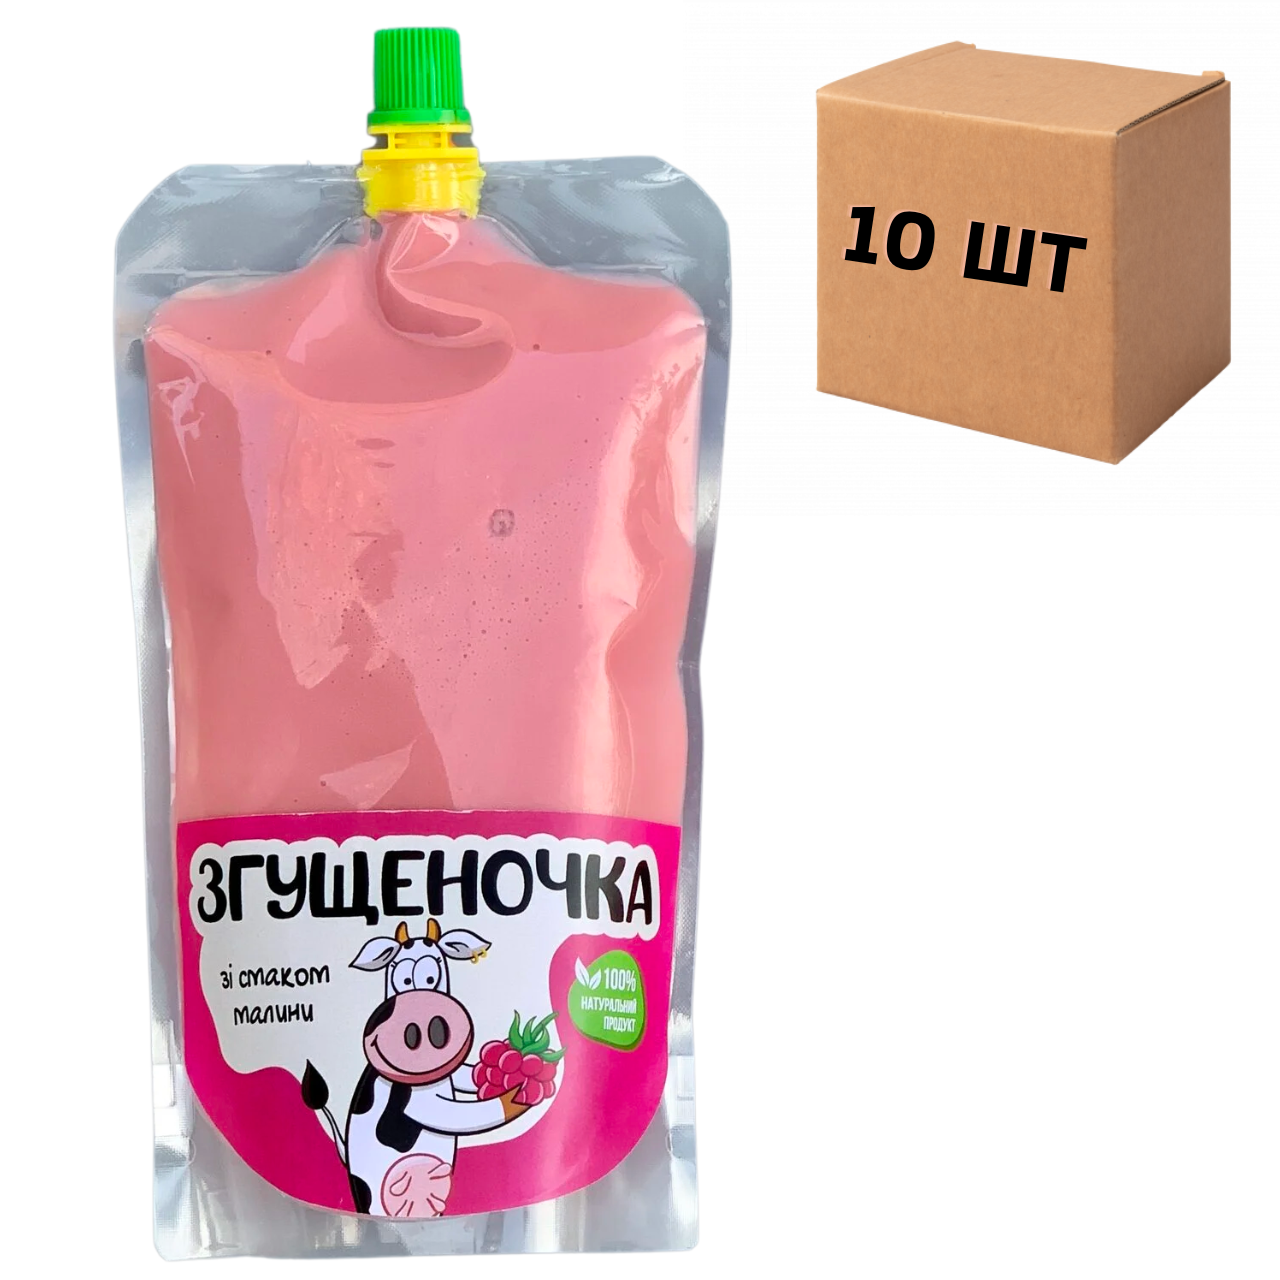 Ящик згущеного молока зі смаком малини в дой-паках 10 шт по 500 г.